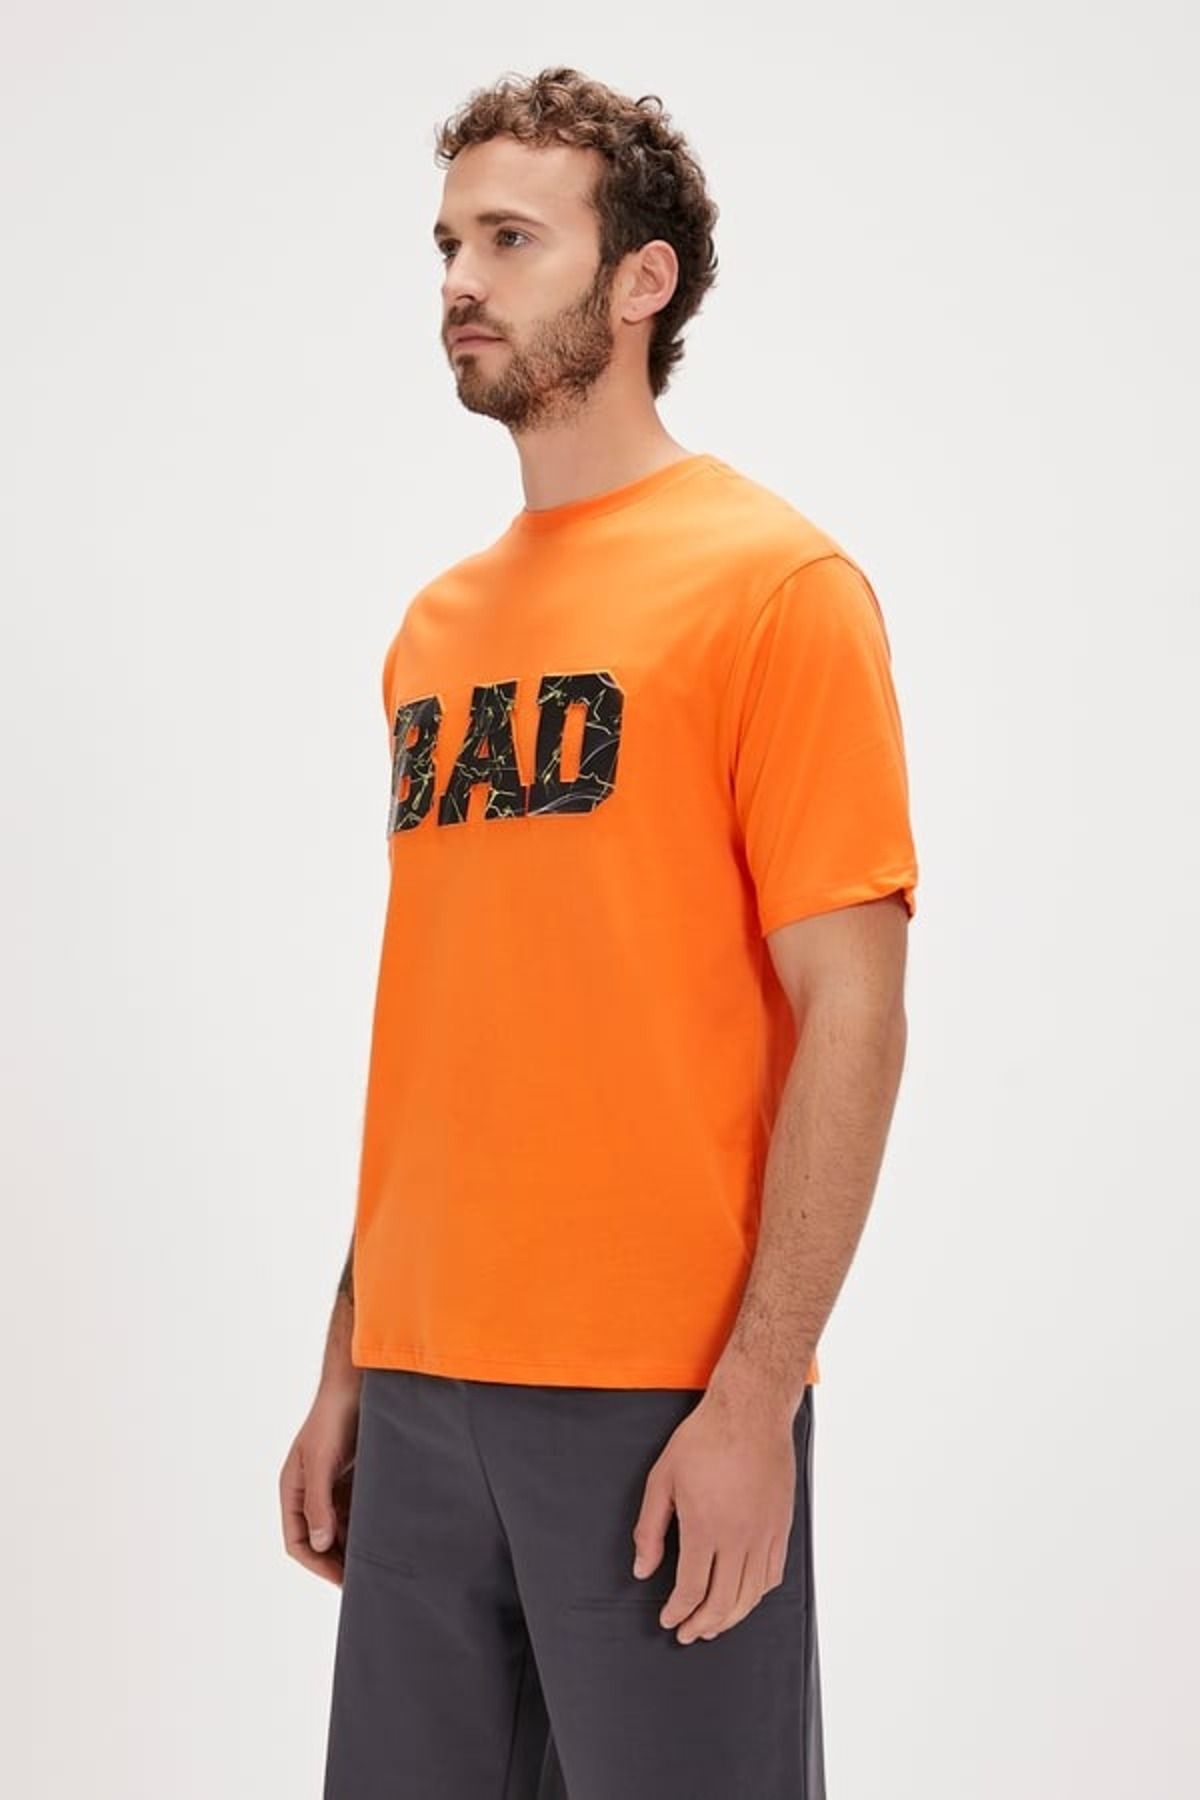 Bad Bear Leven T-shırt Os Erkek T-shirt 24.01.07.061 Orange